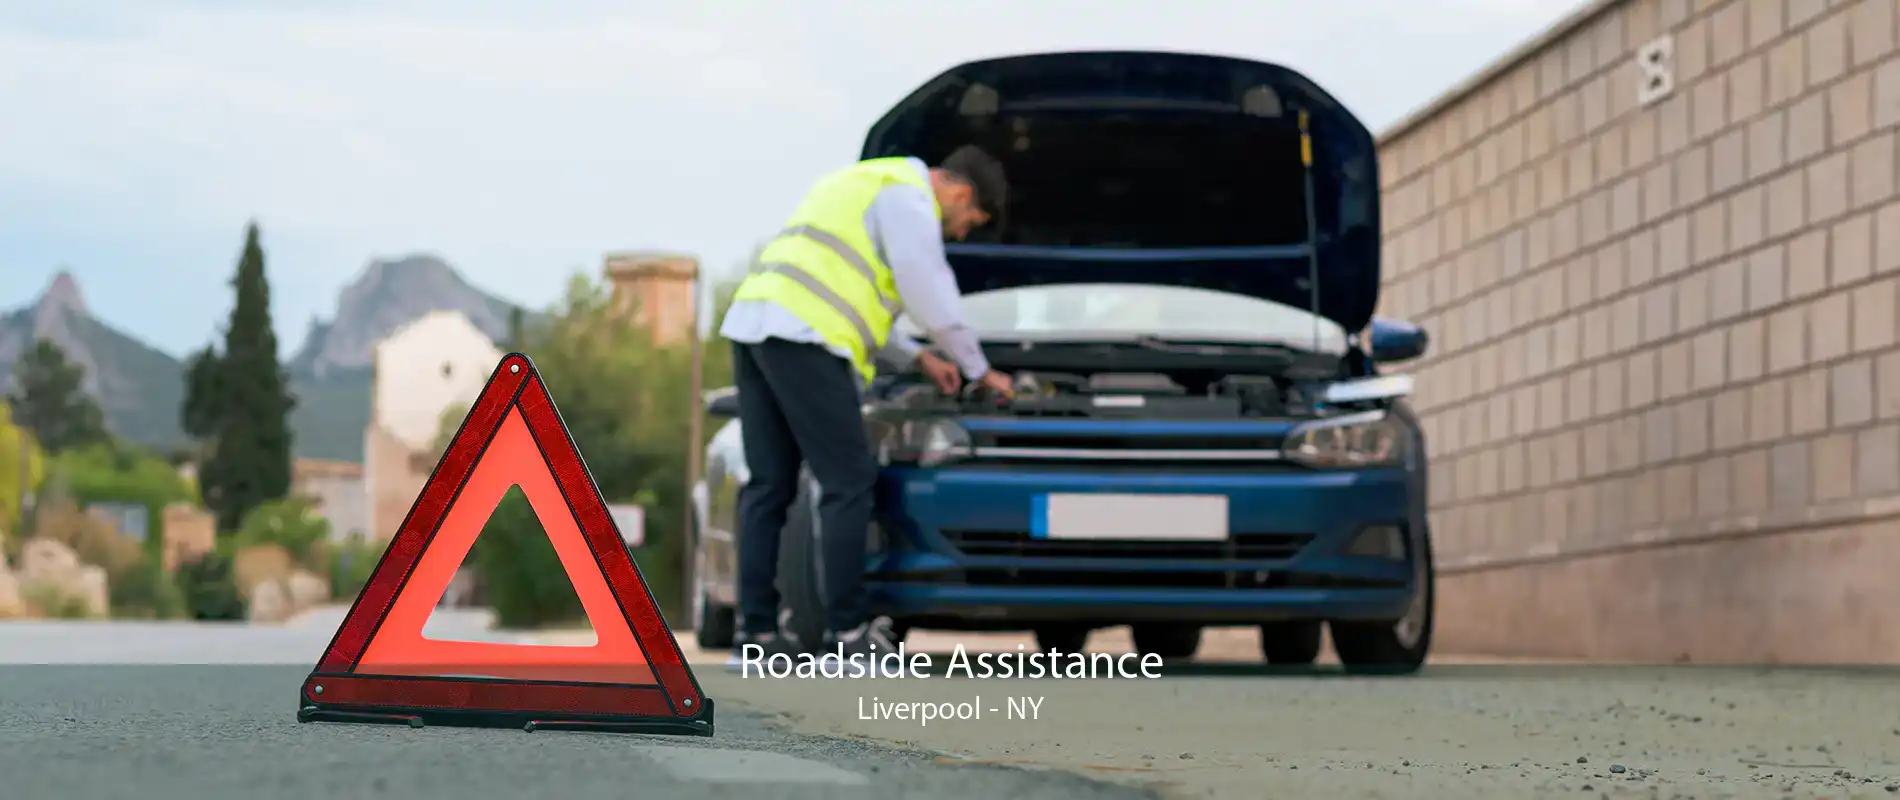 Roadside Assistance Liverpool - NY